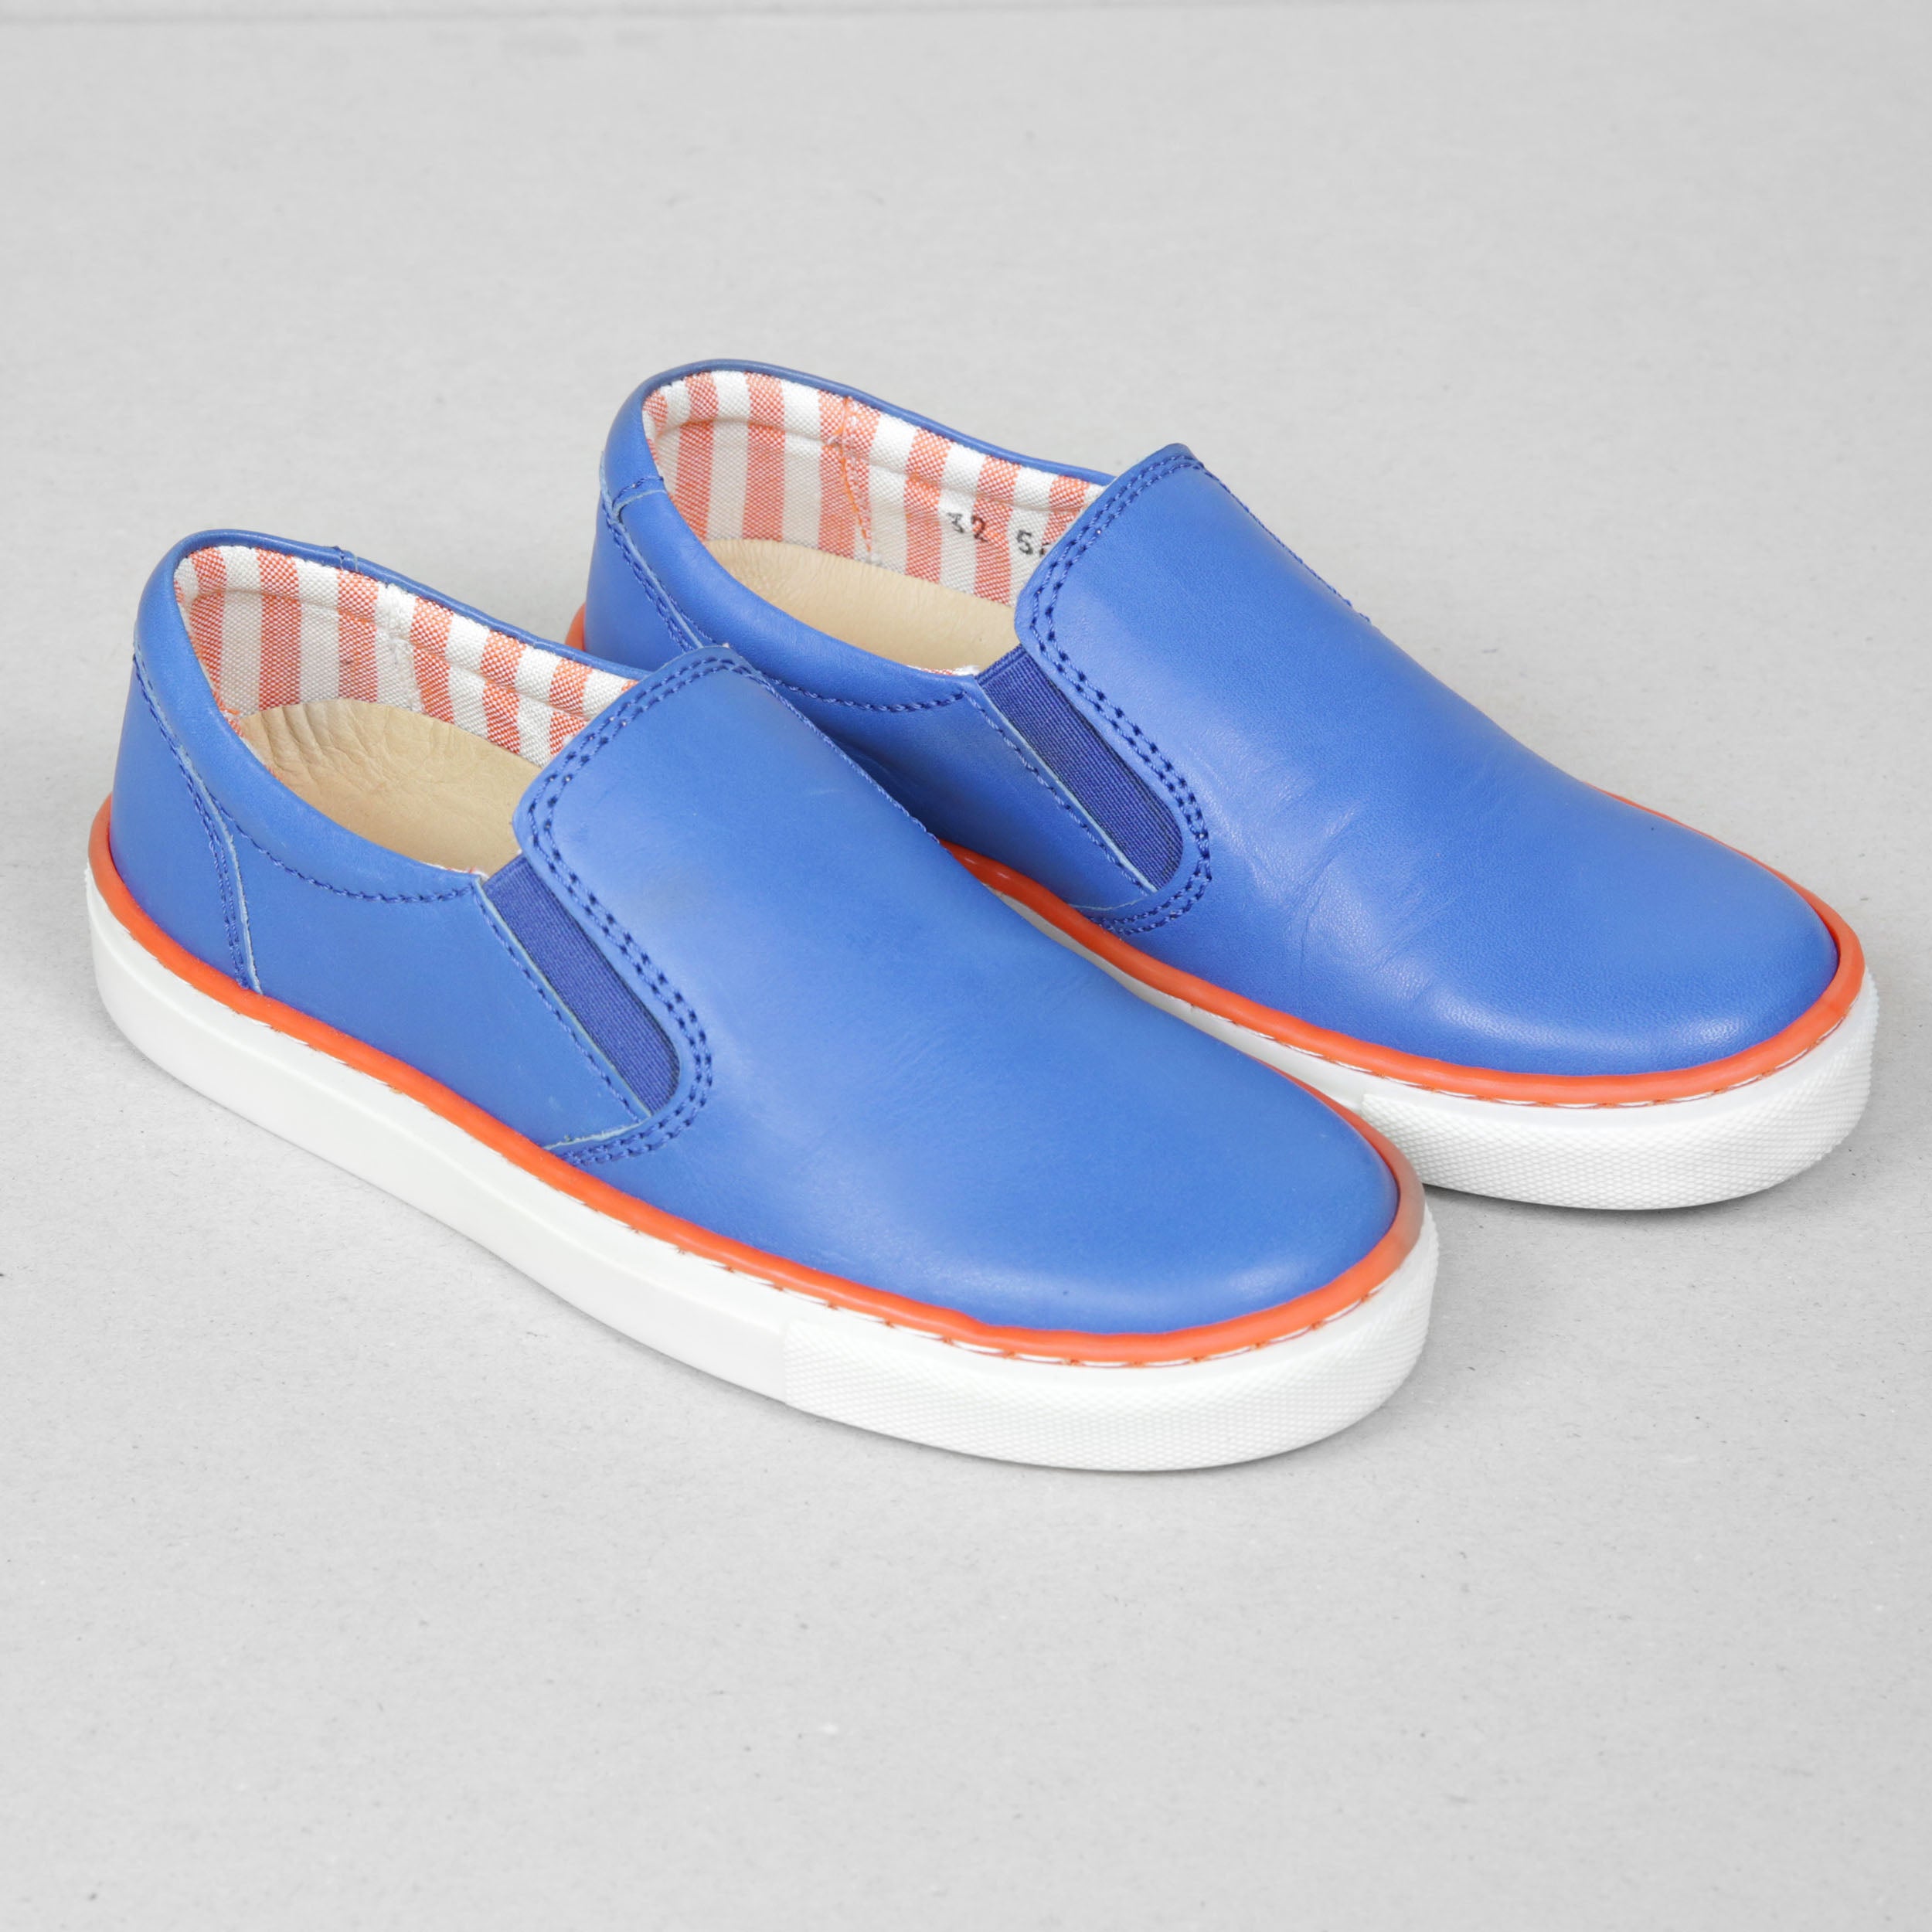 Petasil Pax Kids Boys Royal Blue Slip-On Leather Shoes